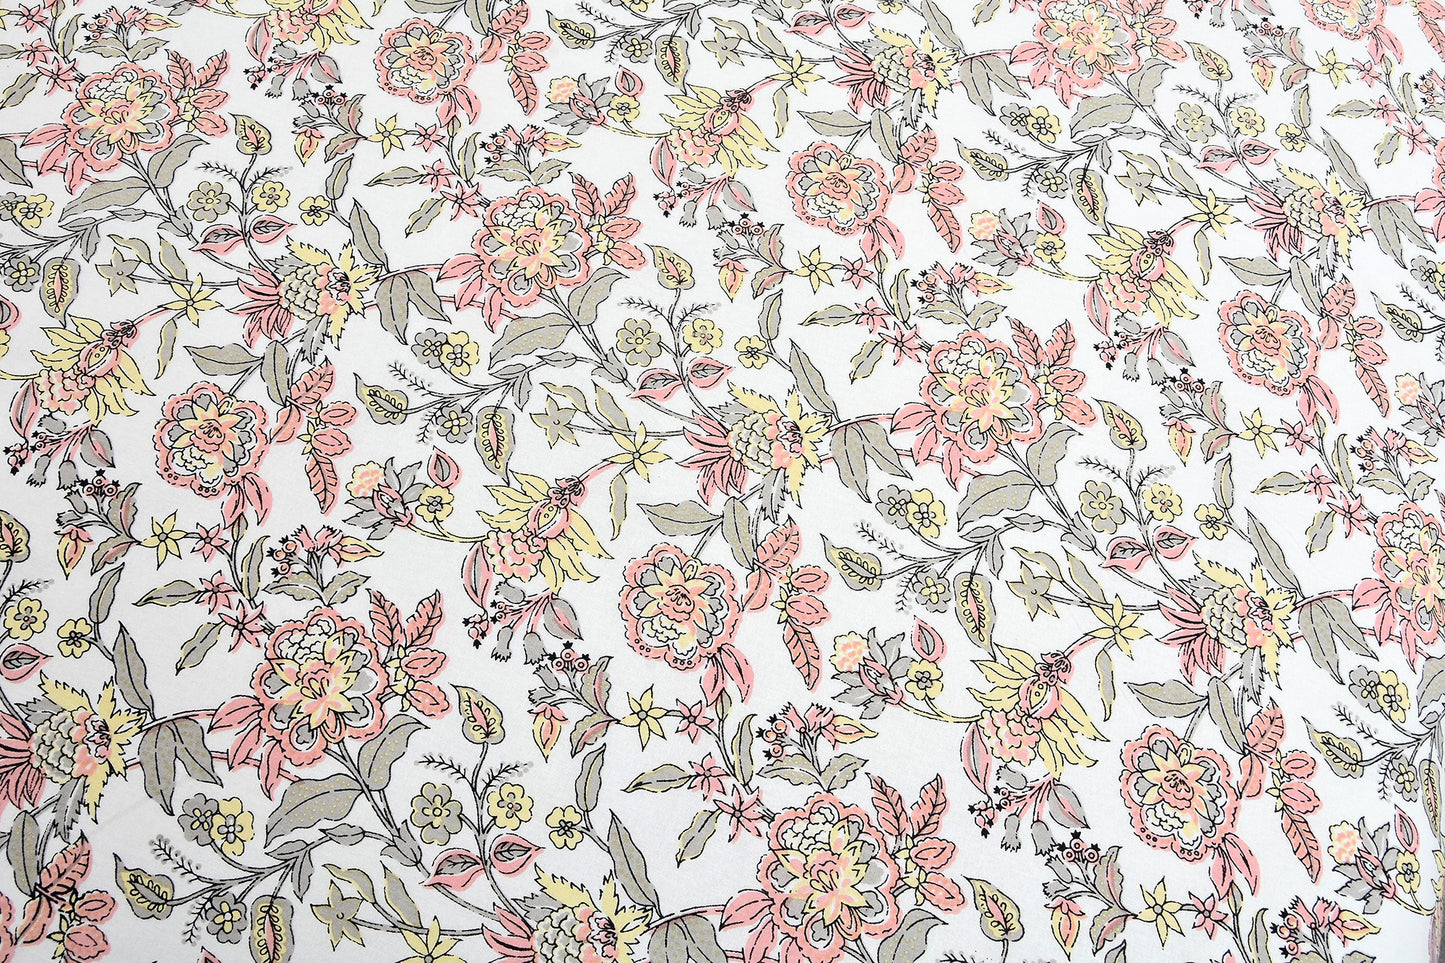 Floral Retreat Soothing Grey Jaipuri Queen Size Cotton Bedsheet